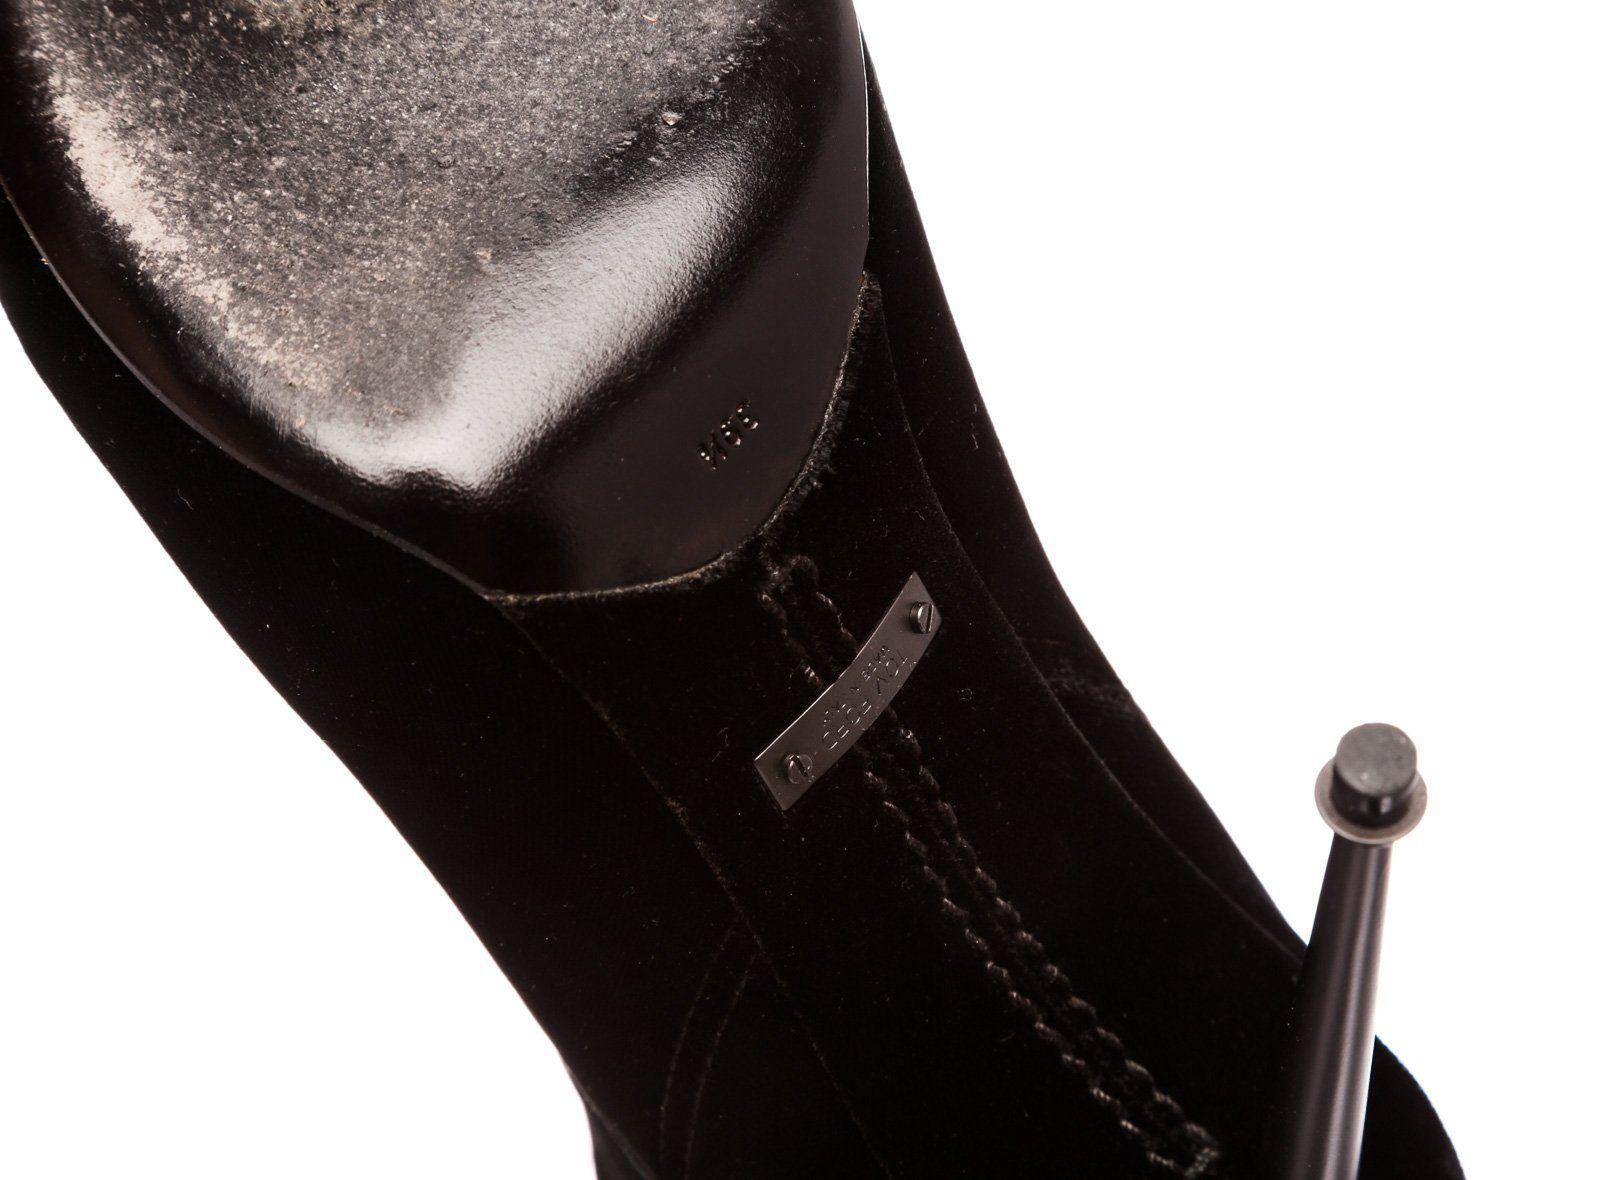 Tom Ford Black Velvet Spiked Boots Heels Shoes 39.5 2